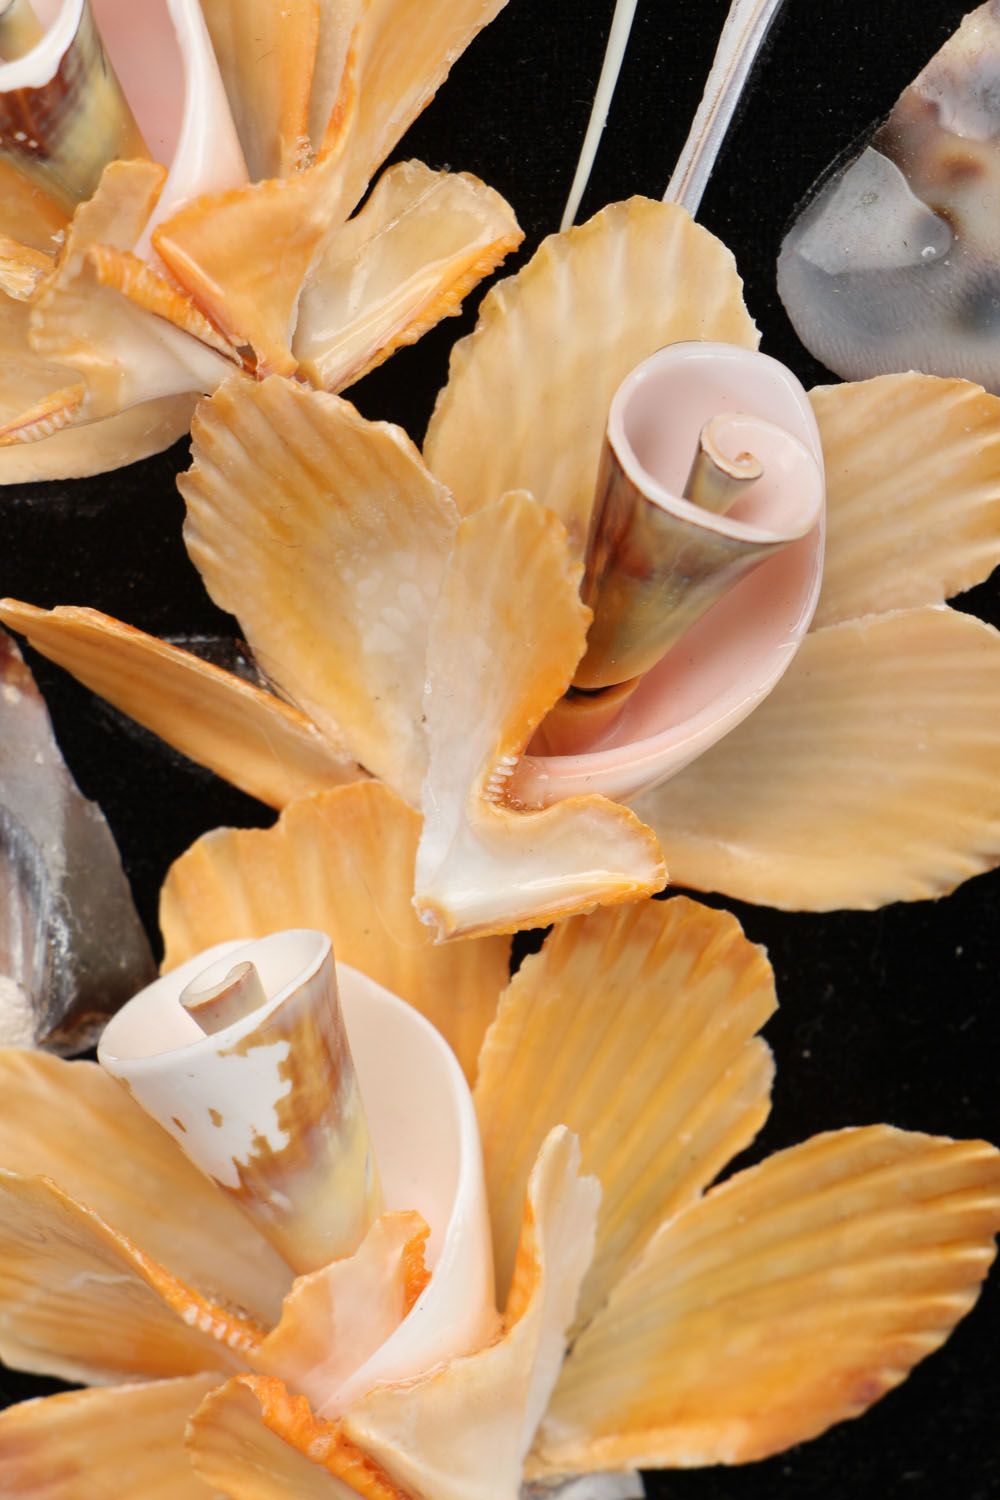 Unusual panel with shells and fish bones photo 3